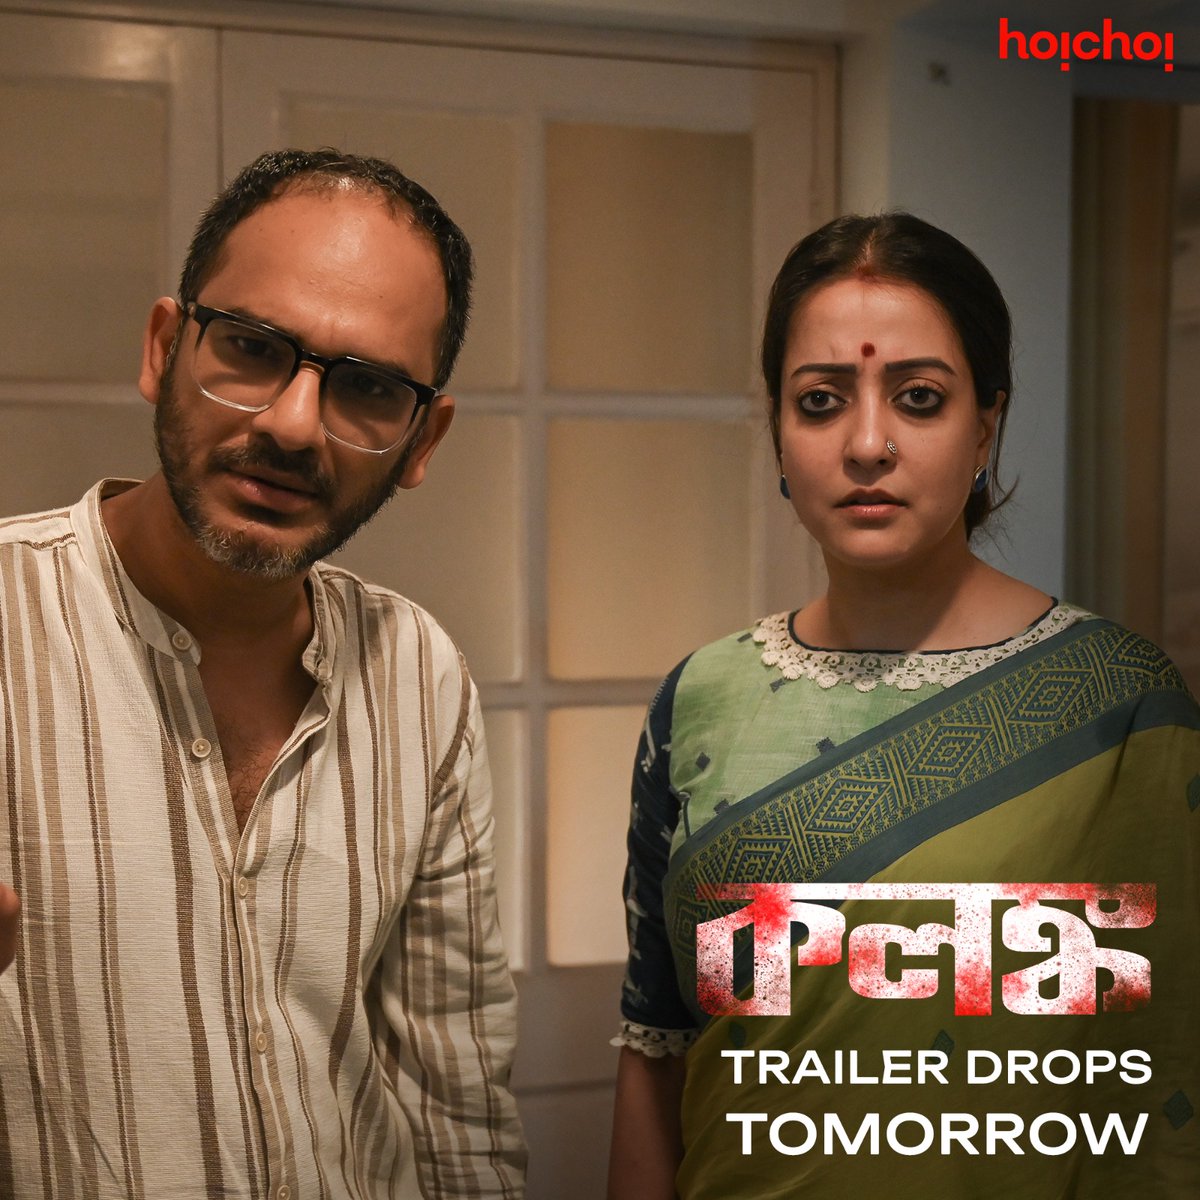 Is truth harder than dare? #Kolonko: Trailer drops tomorrow | Series directed by @abhimanyumuk premieres on 19th January, only on #hoichoi. @raimasen #RitwickChakraborty @sahana_kajori @missingscrw @rohitsamanta